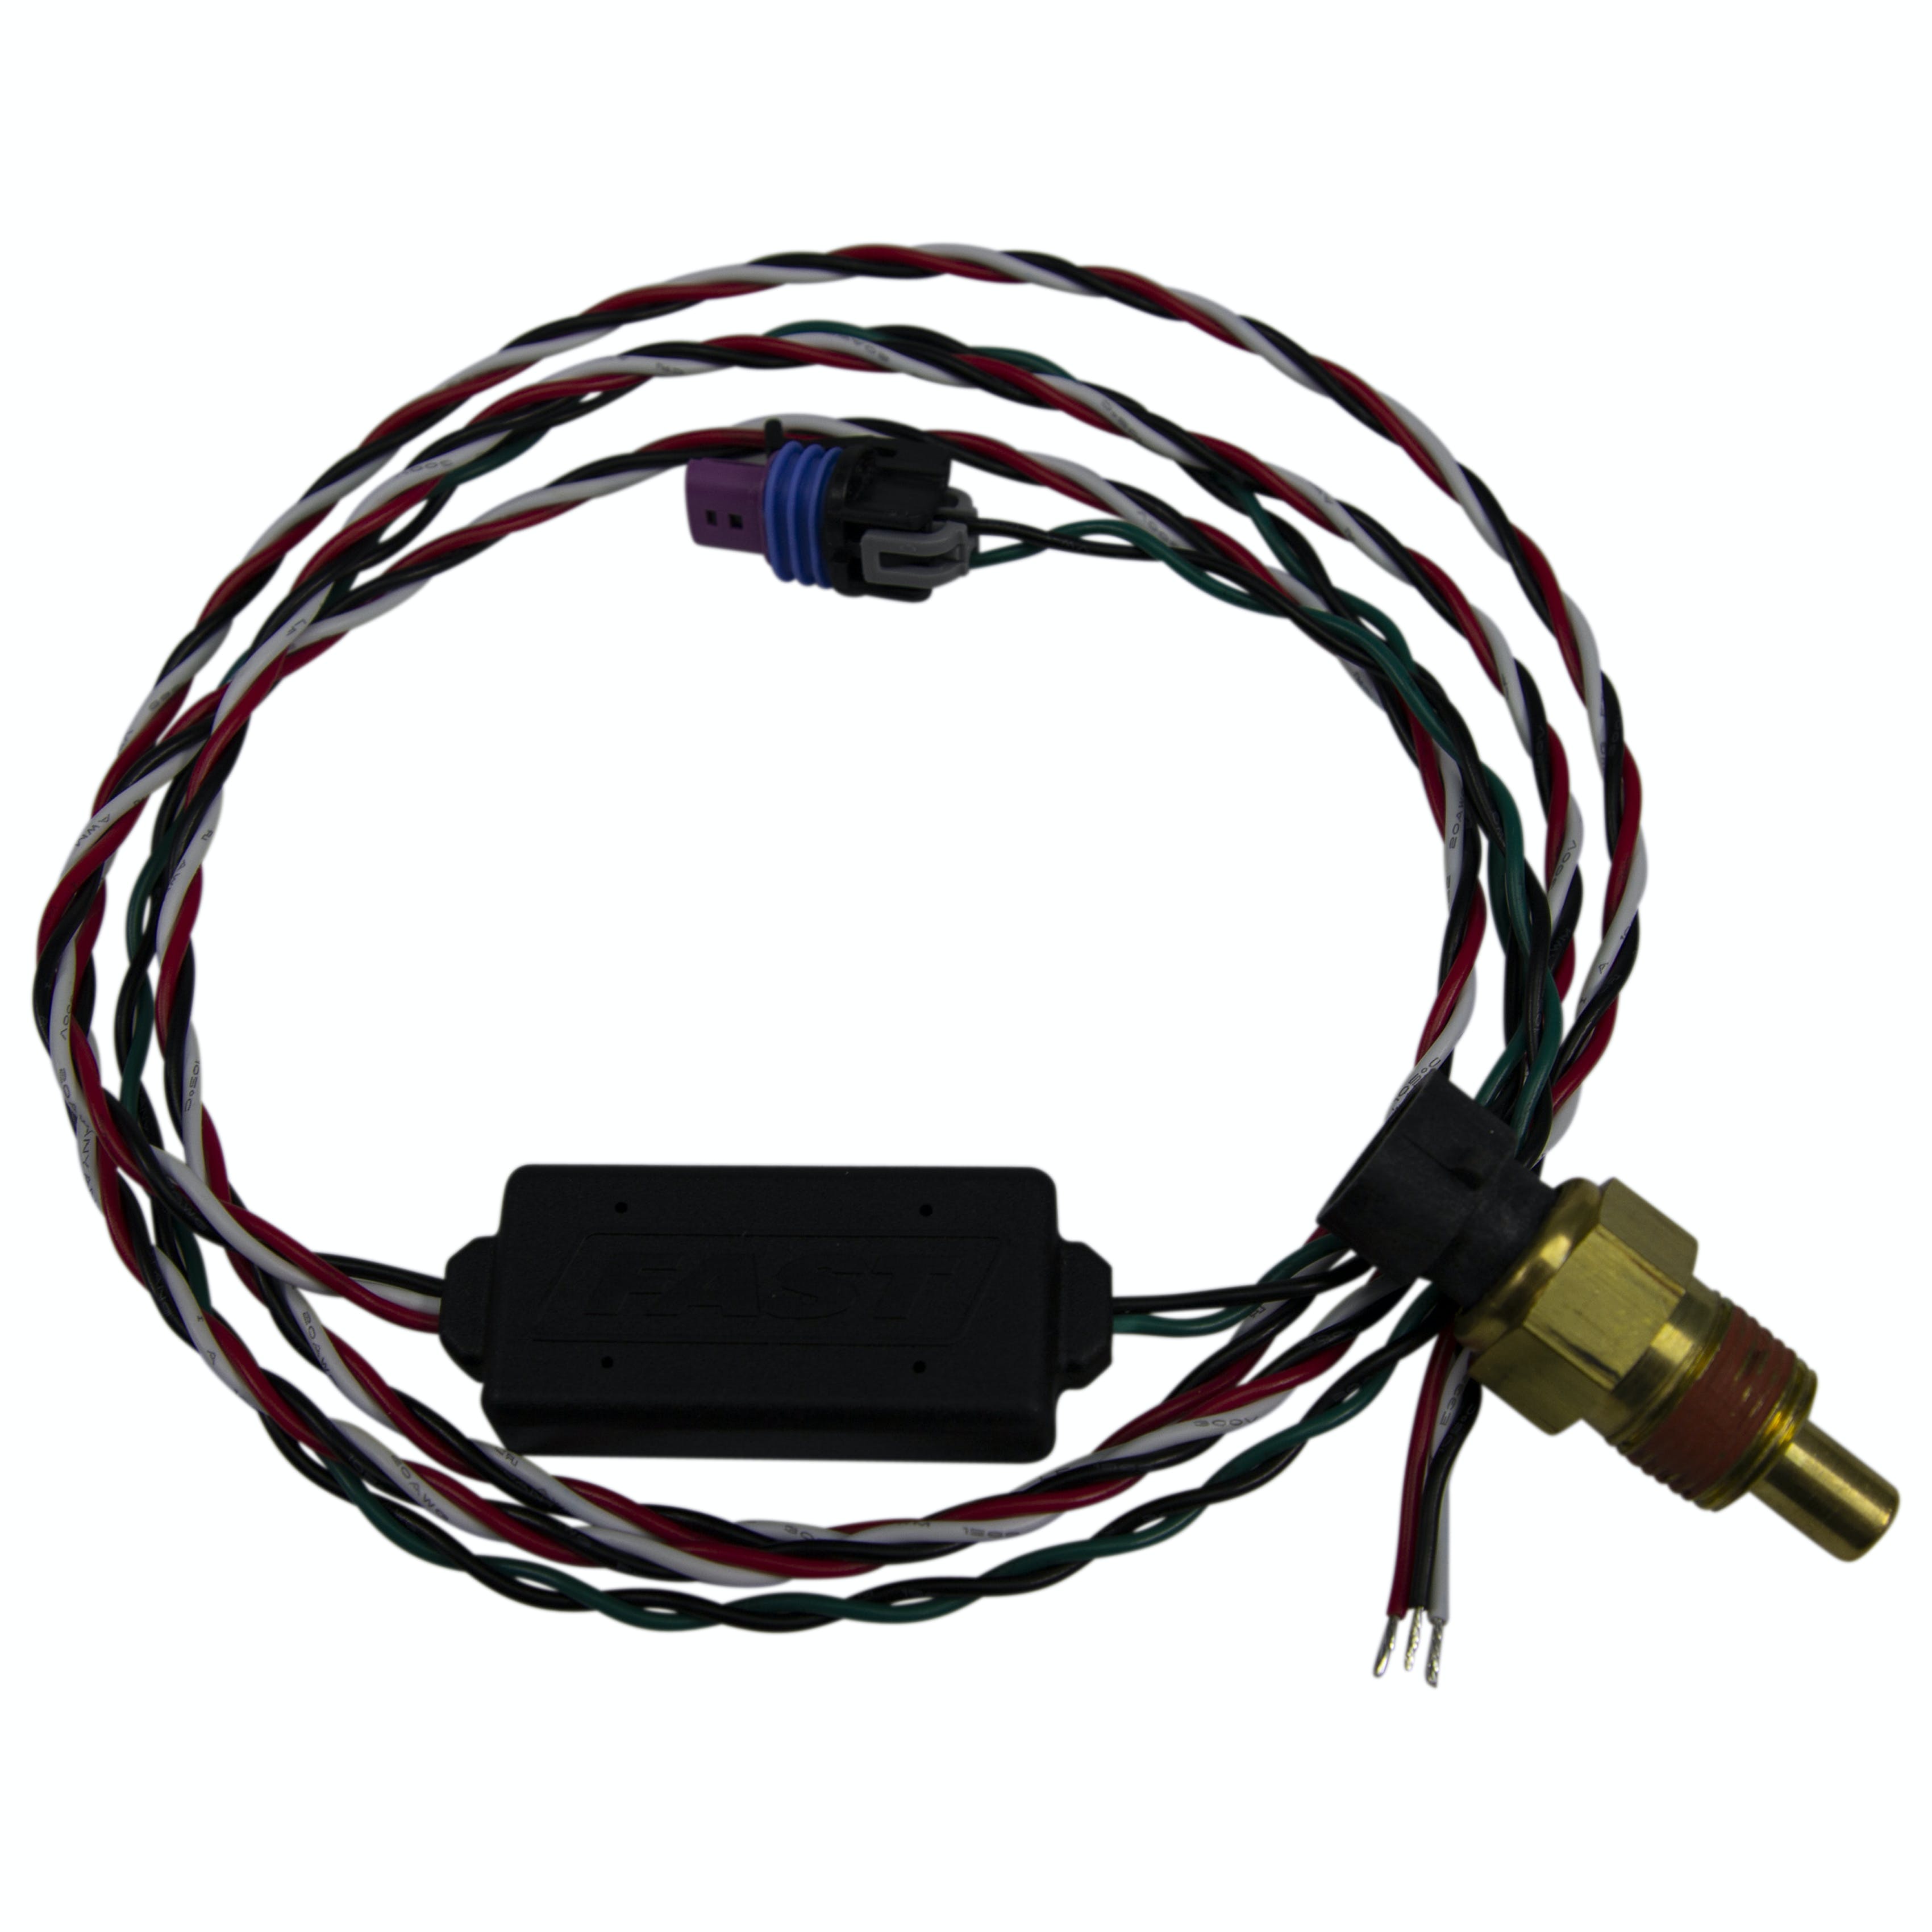 FAST - Fuel Air Spark Technology 307038 Fluid Digital Temperature Sensor w/ 12 Volt to 5 Volt Output Converter Kit